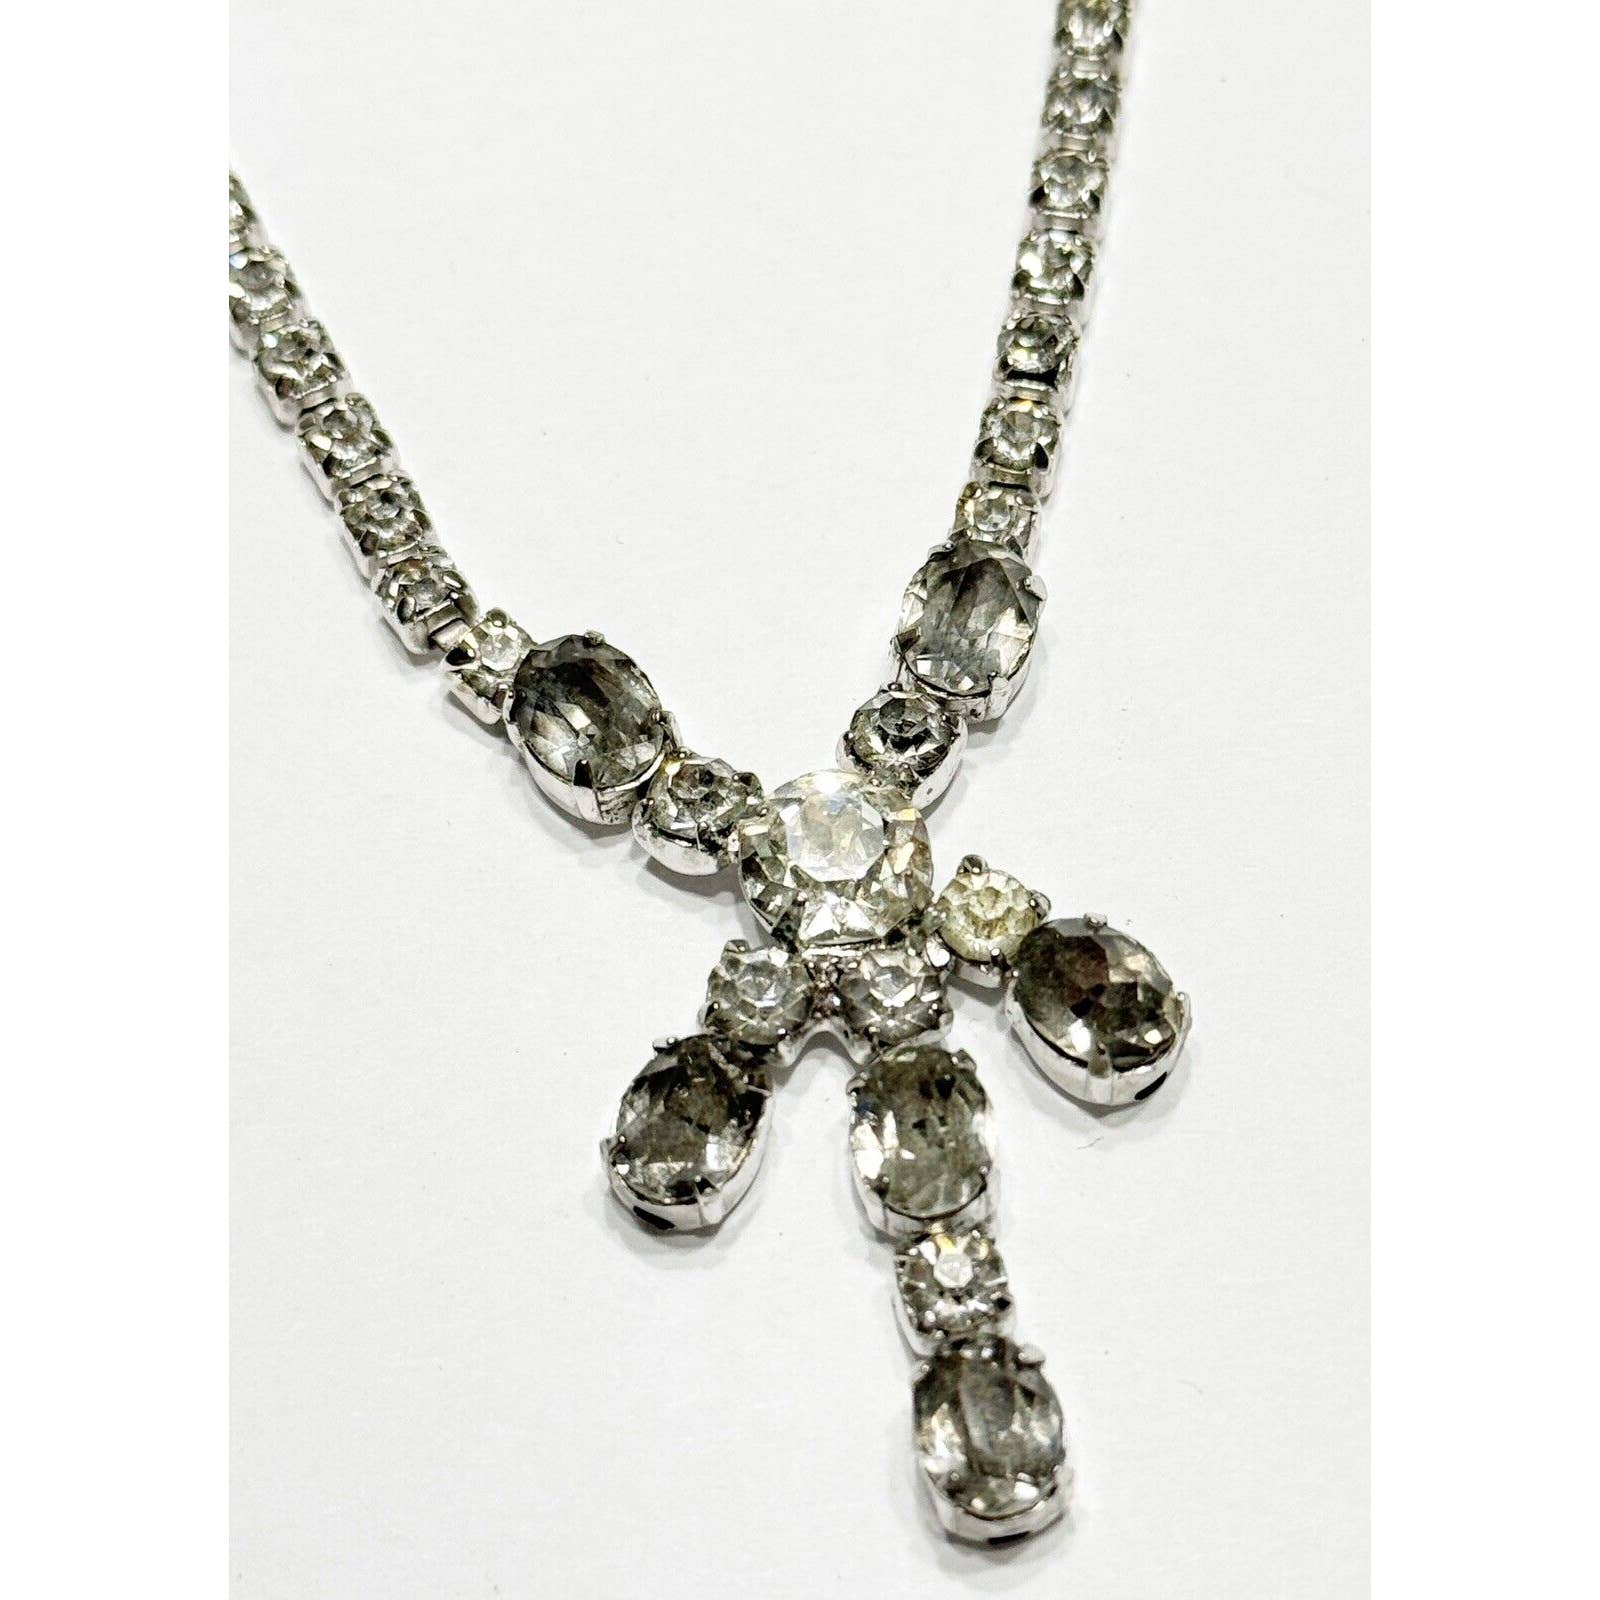 kramersigned kramer vintage necklace clear and black diamond rhinestone deco style 206587